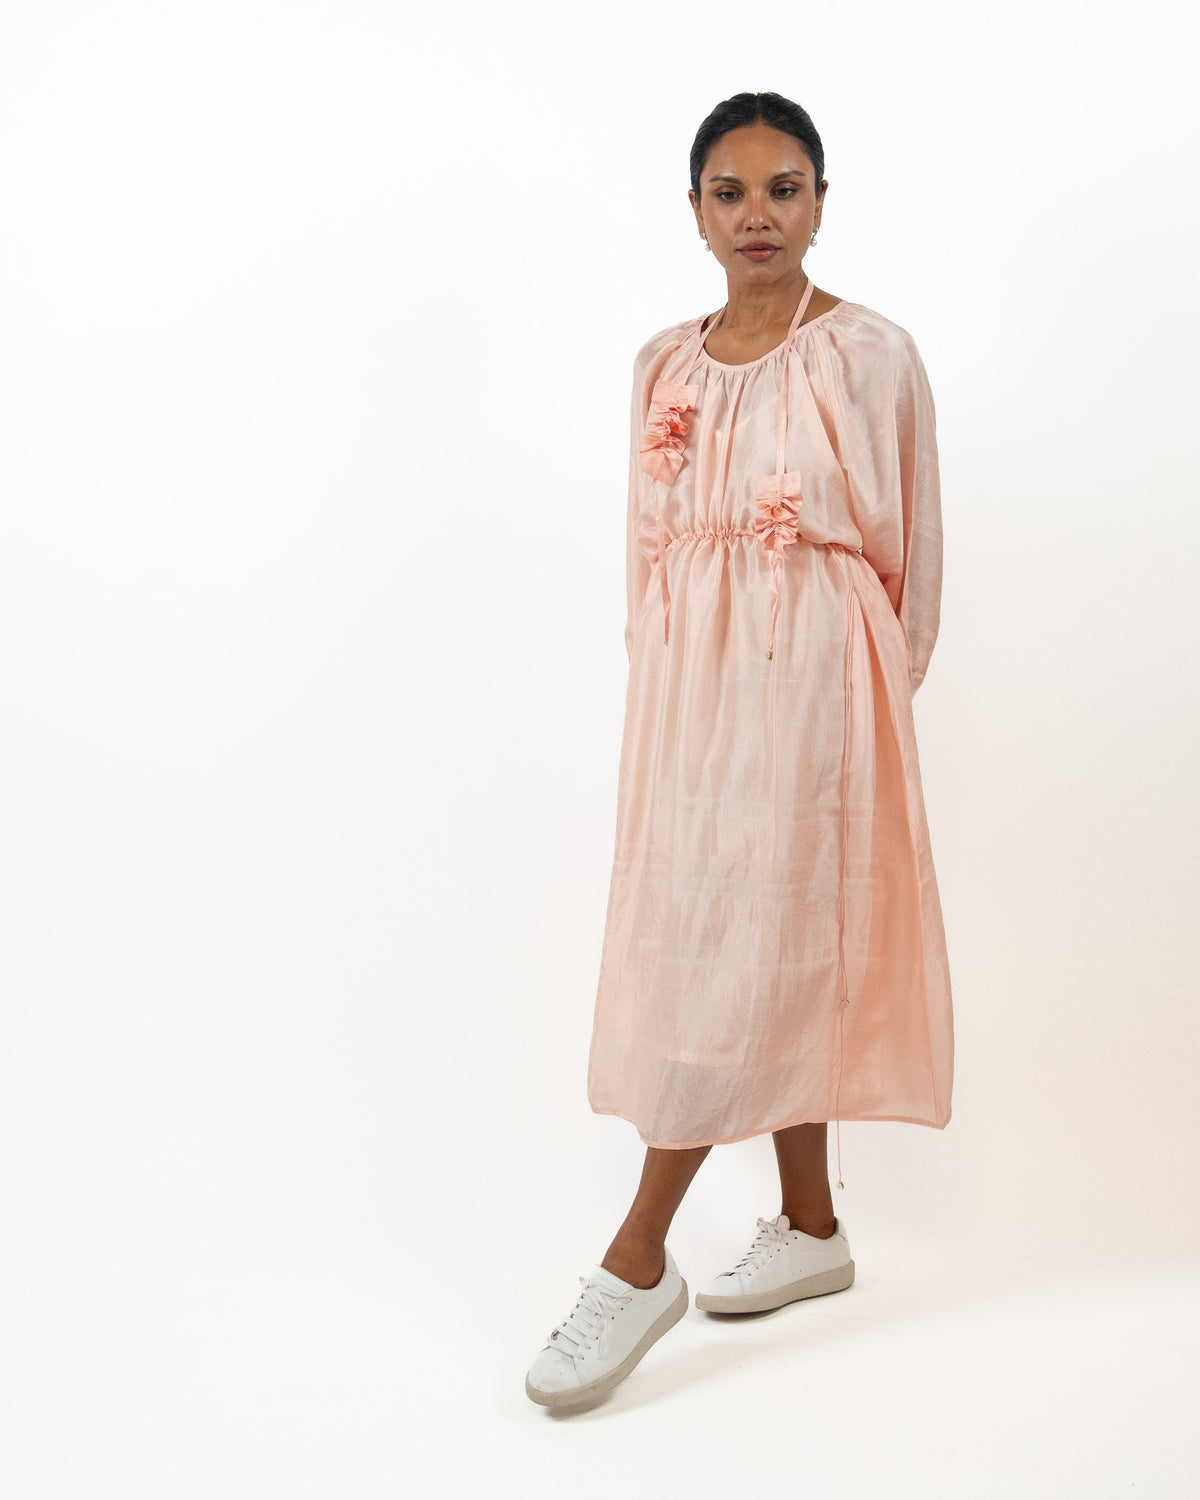 Coral Silk Dress by Bunon